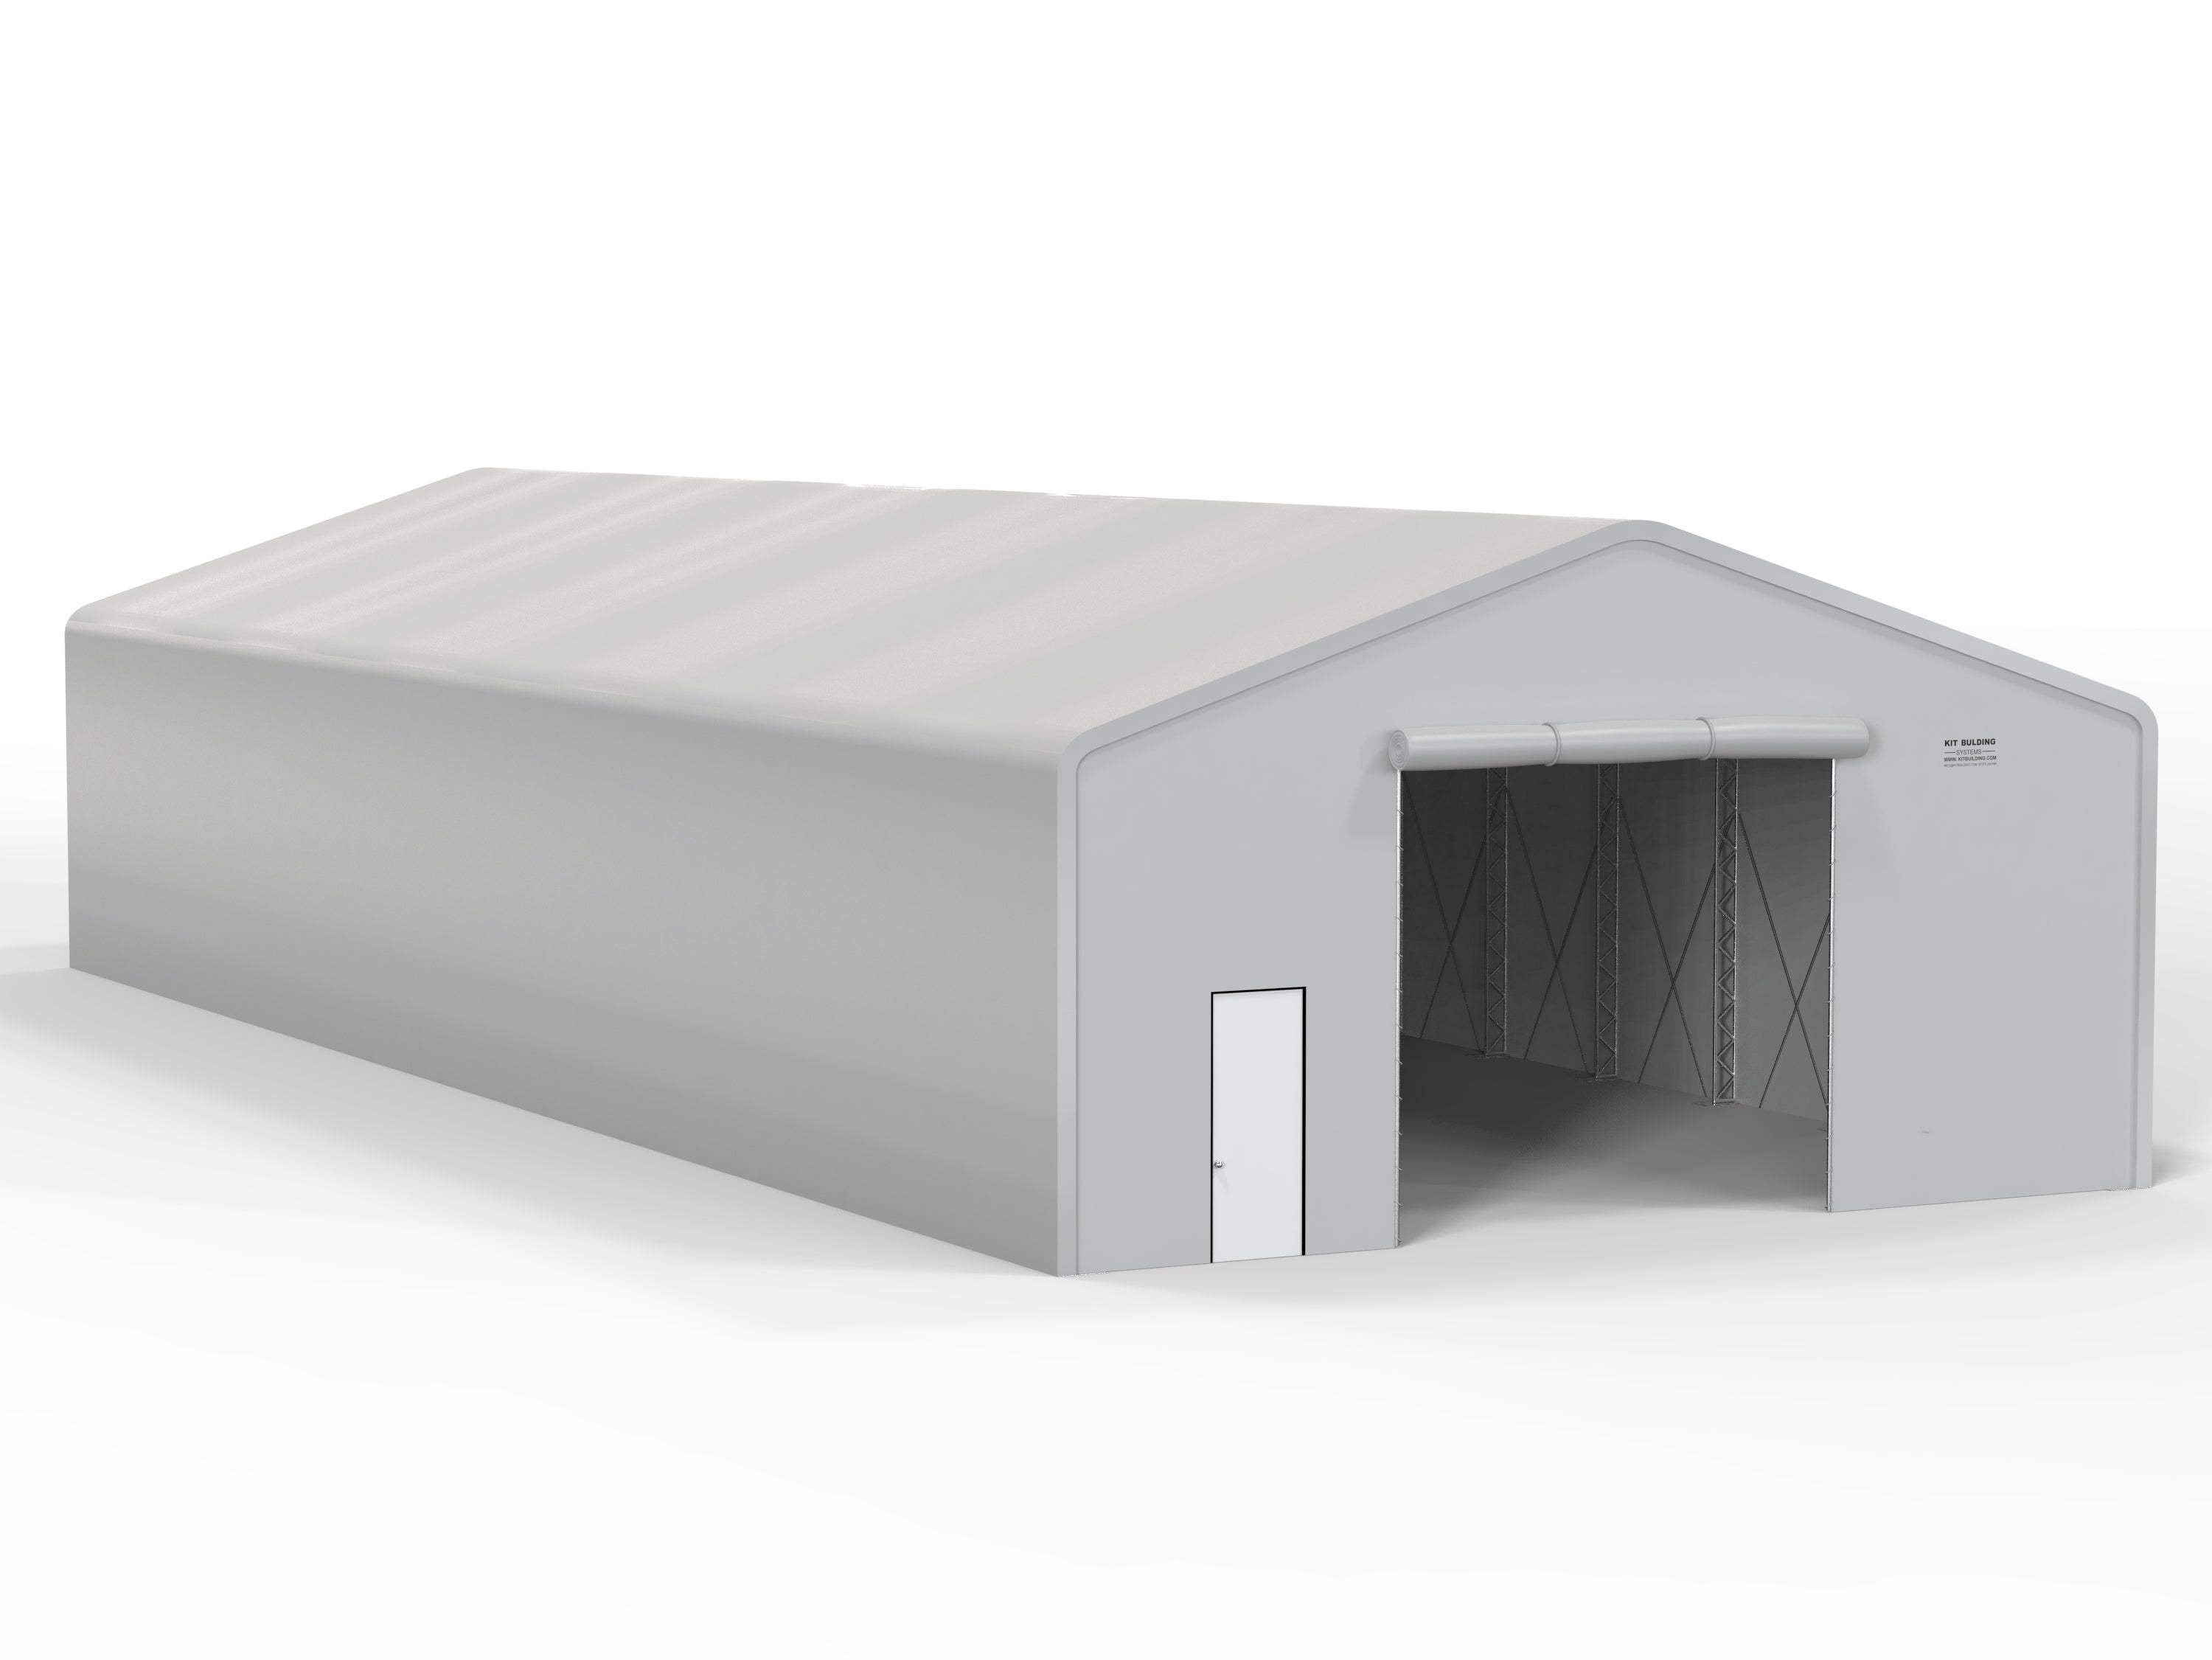 Double Truss PVC temporary storage building - Grey - Manual PVC Roll up door